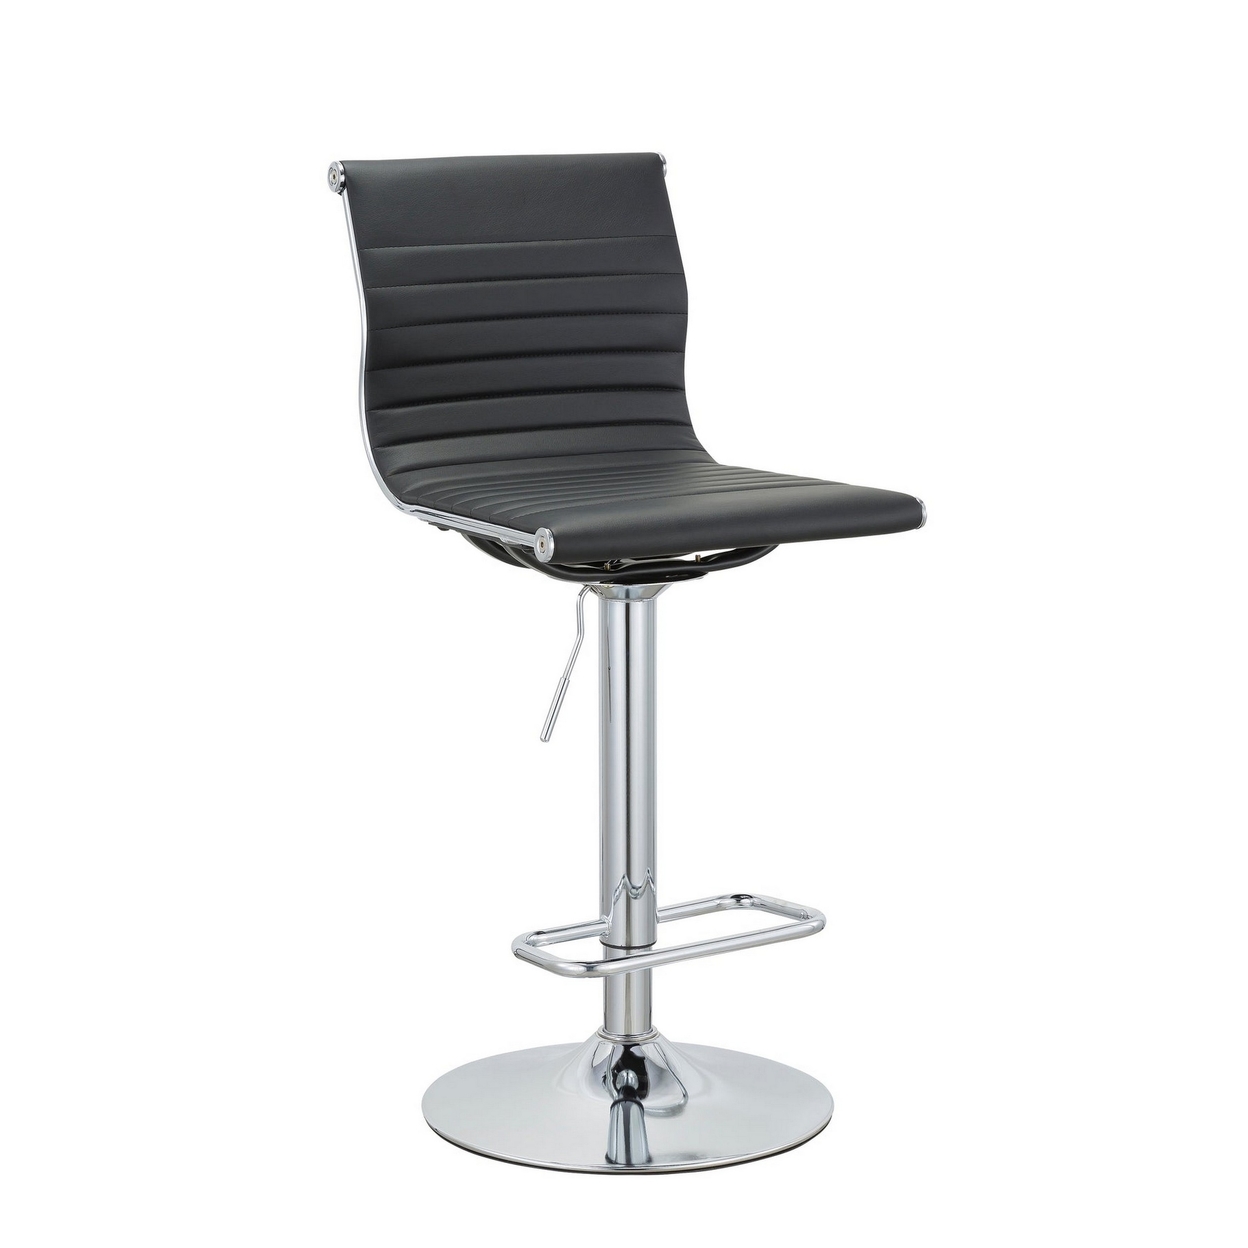 Beli 24-31 Inch Barstool Chair, Set Of 2, Adjustable Height, Chrome, Black- Saltoro Sherpi